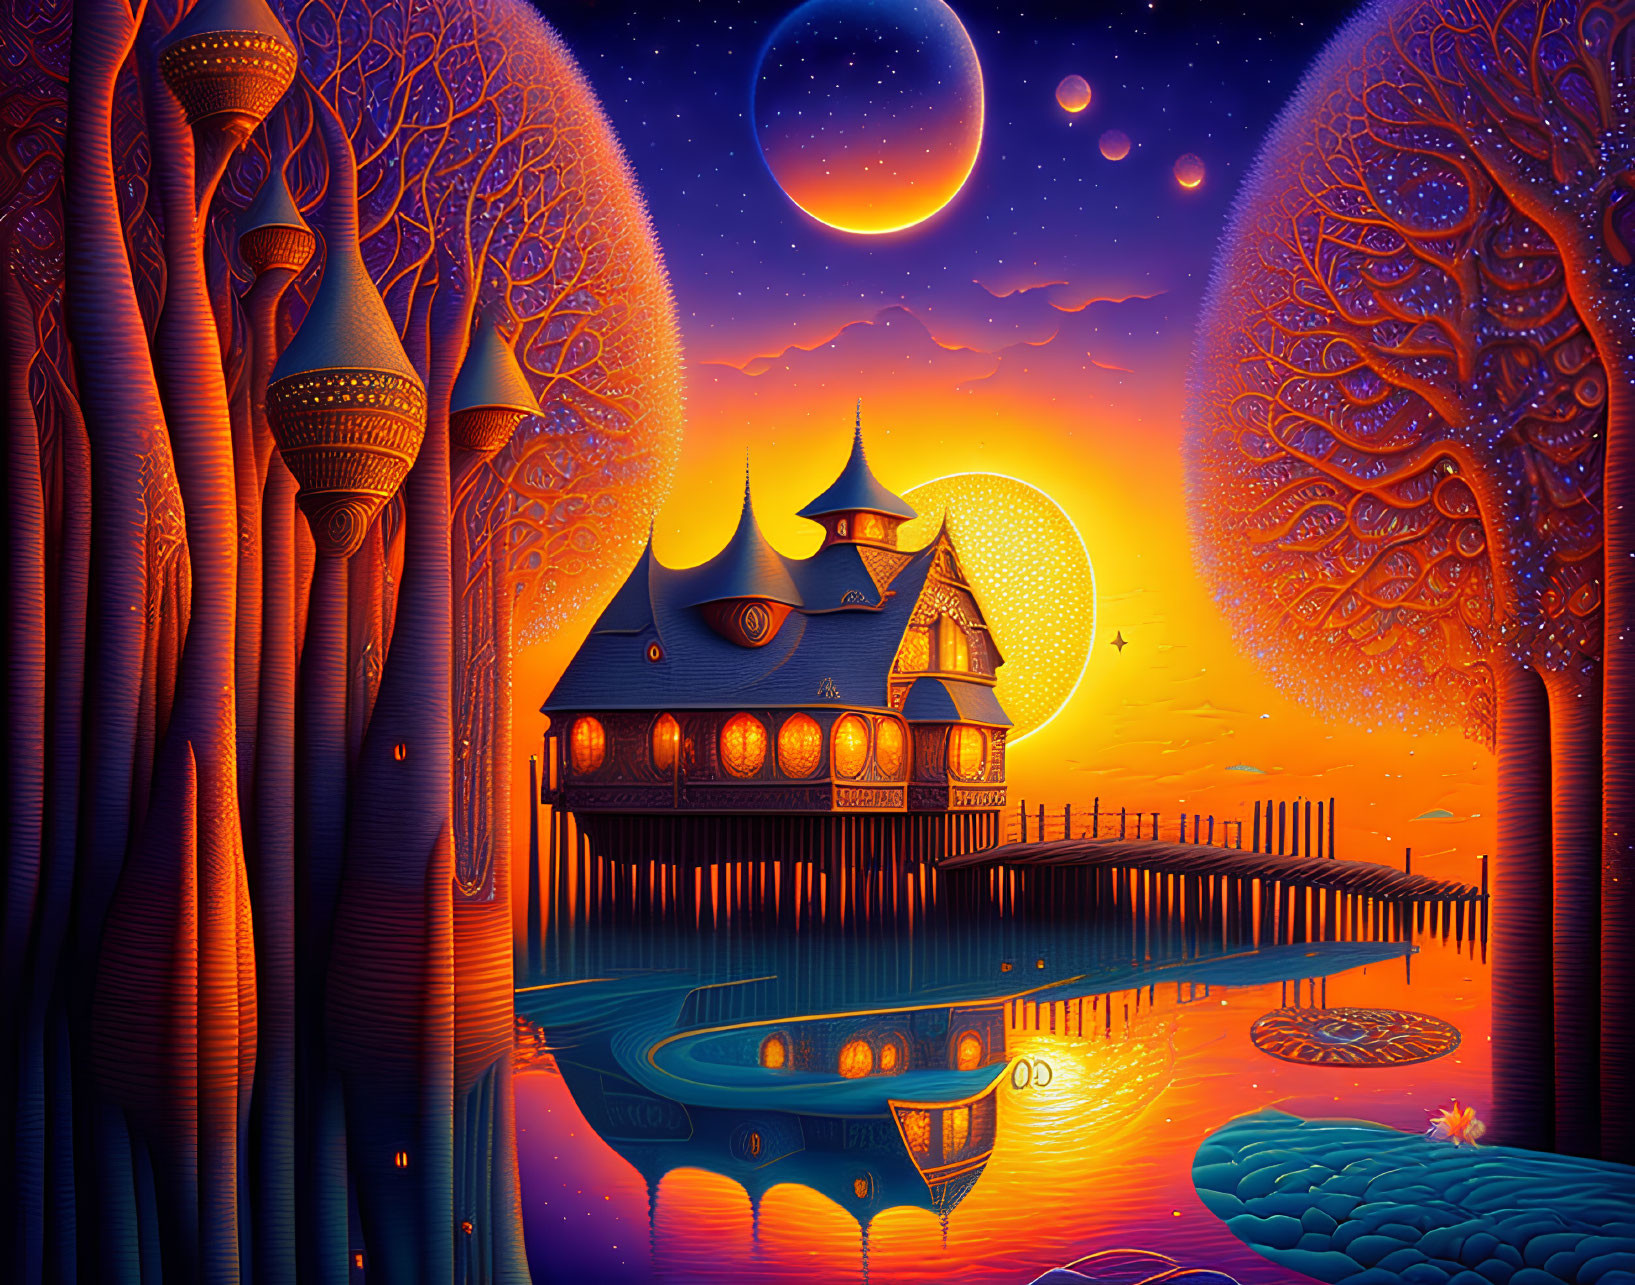 Vibrant twilight digital artwork of fairytale house on stilts in starry sky